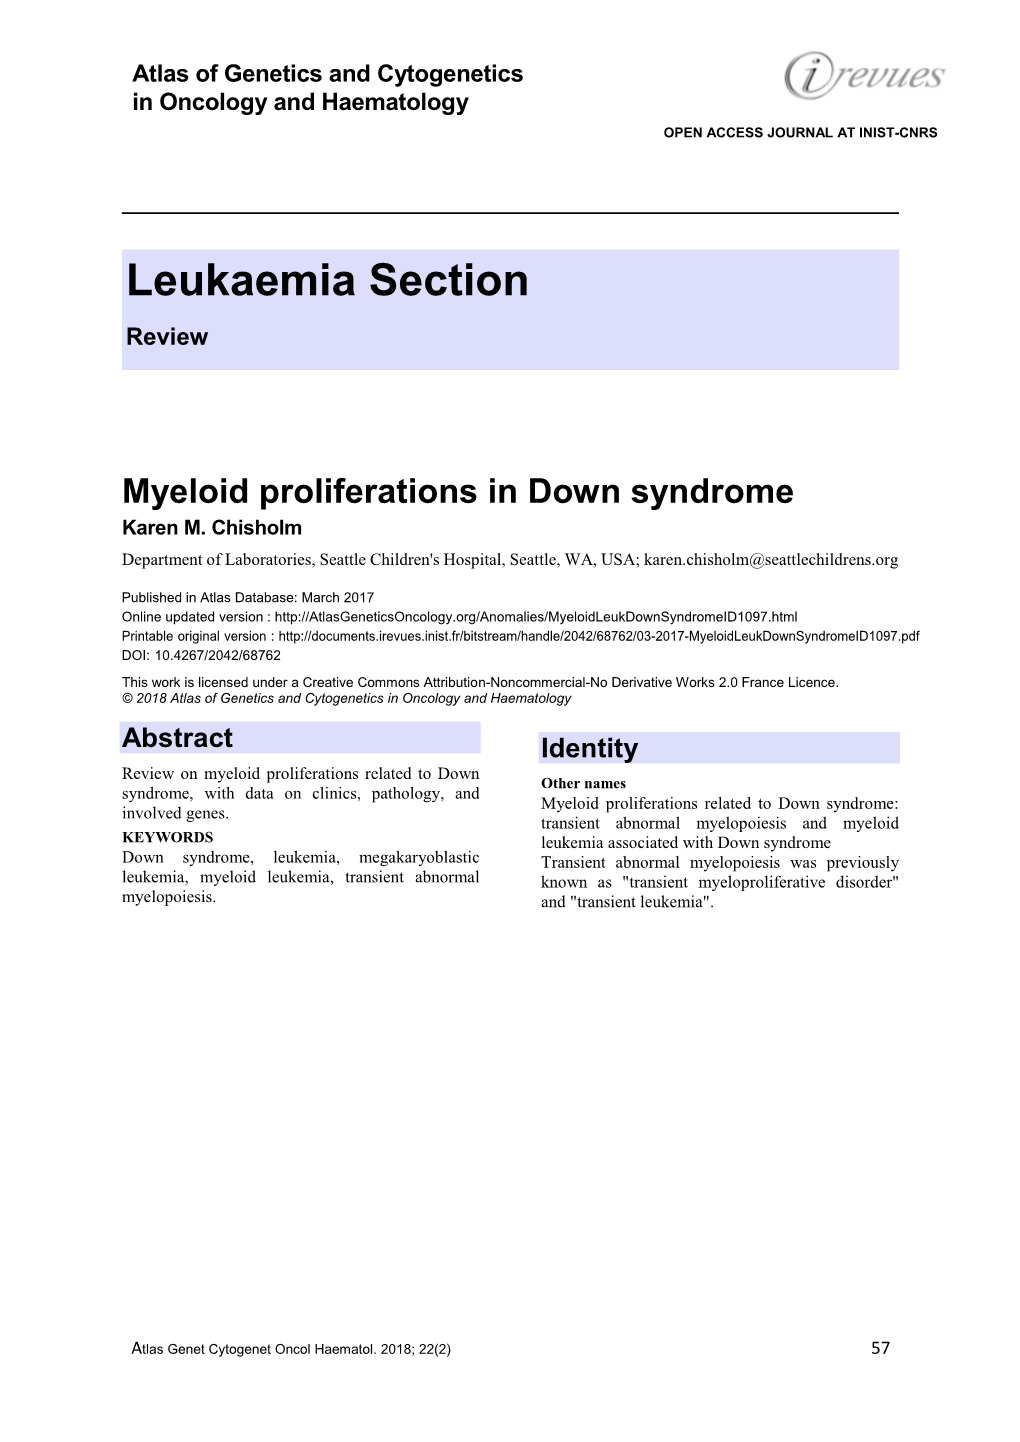 Leukaemia Section Review